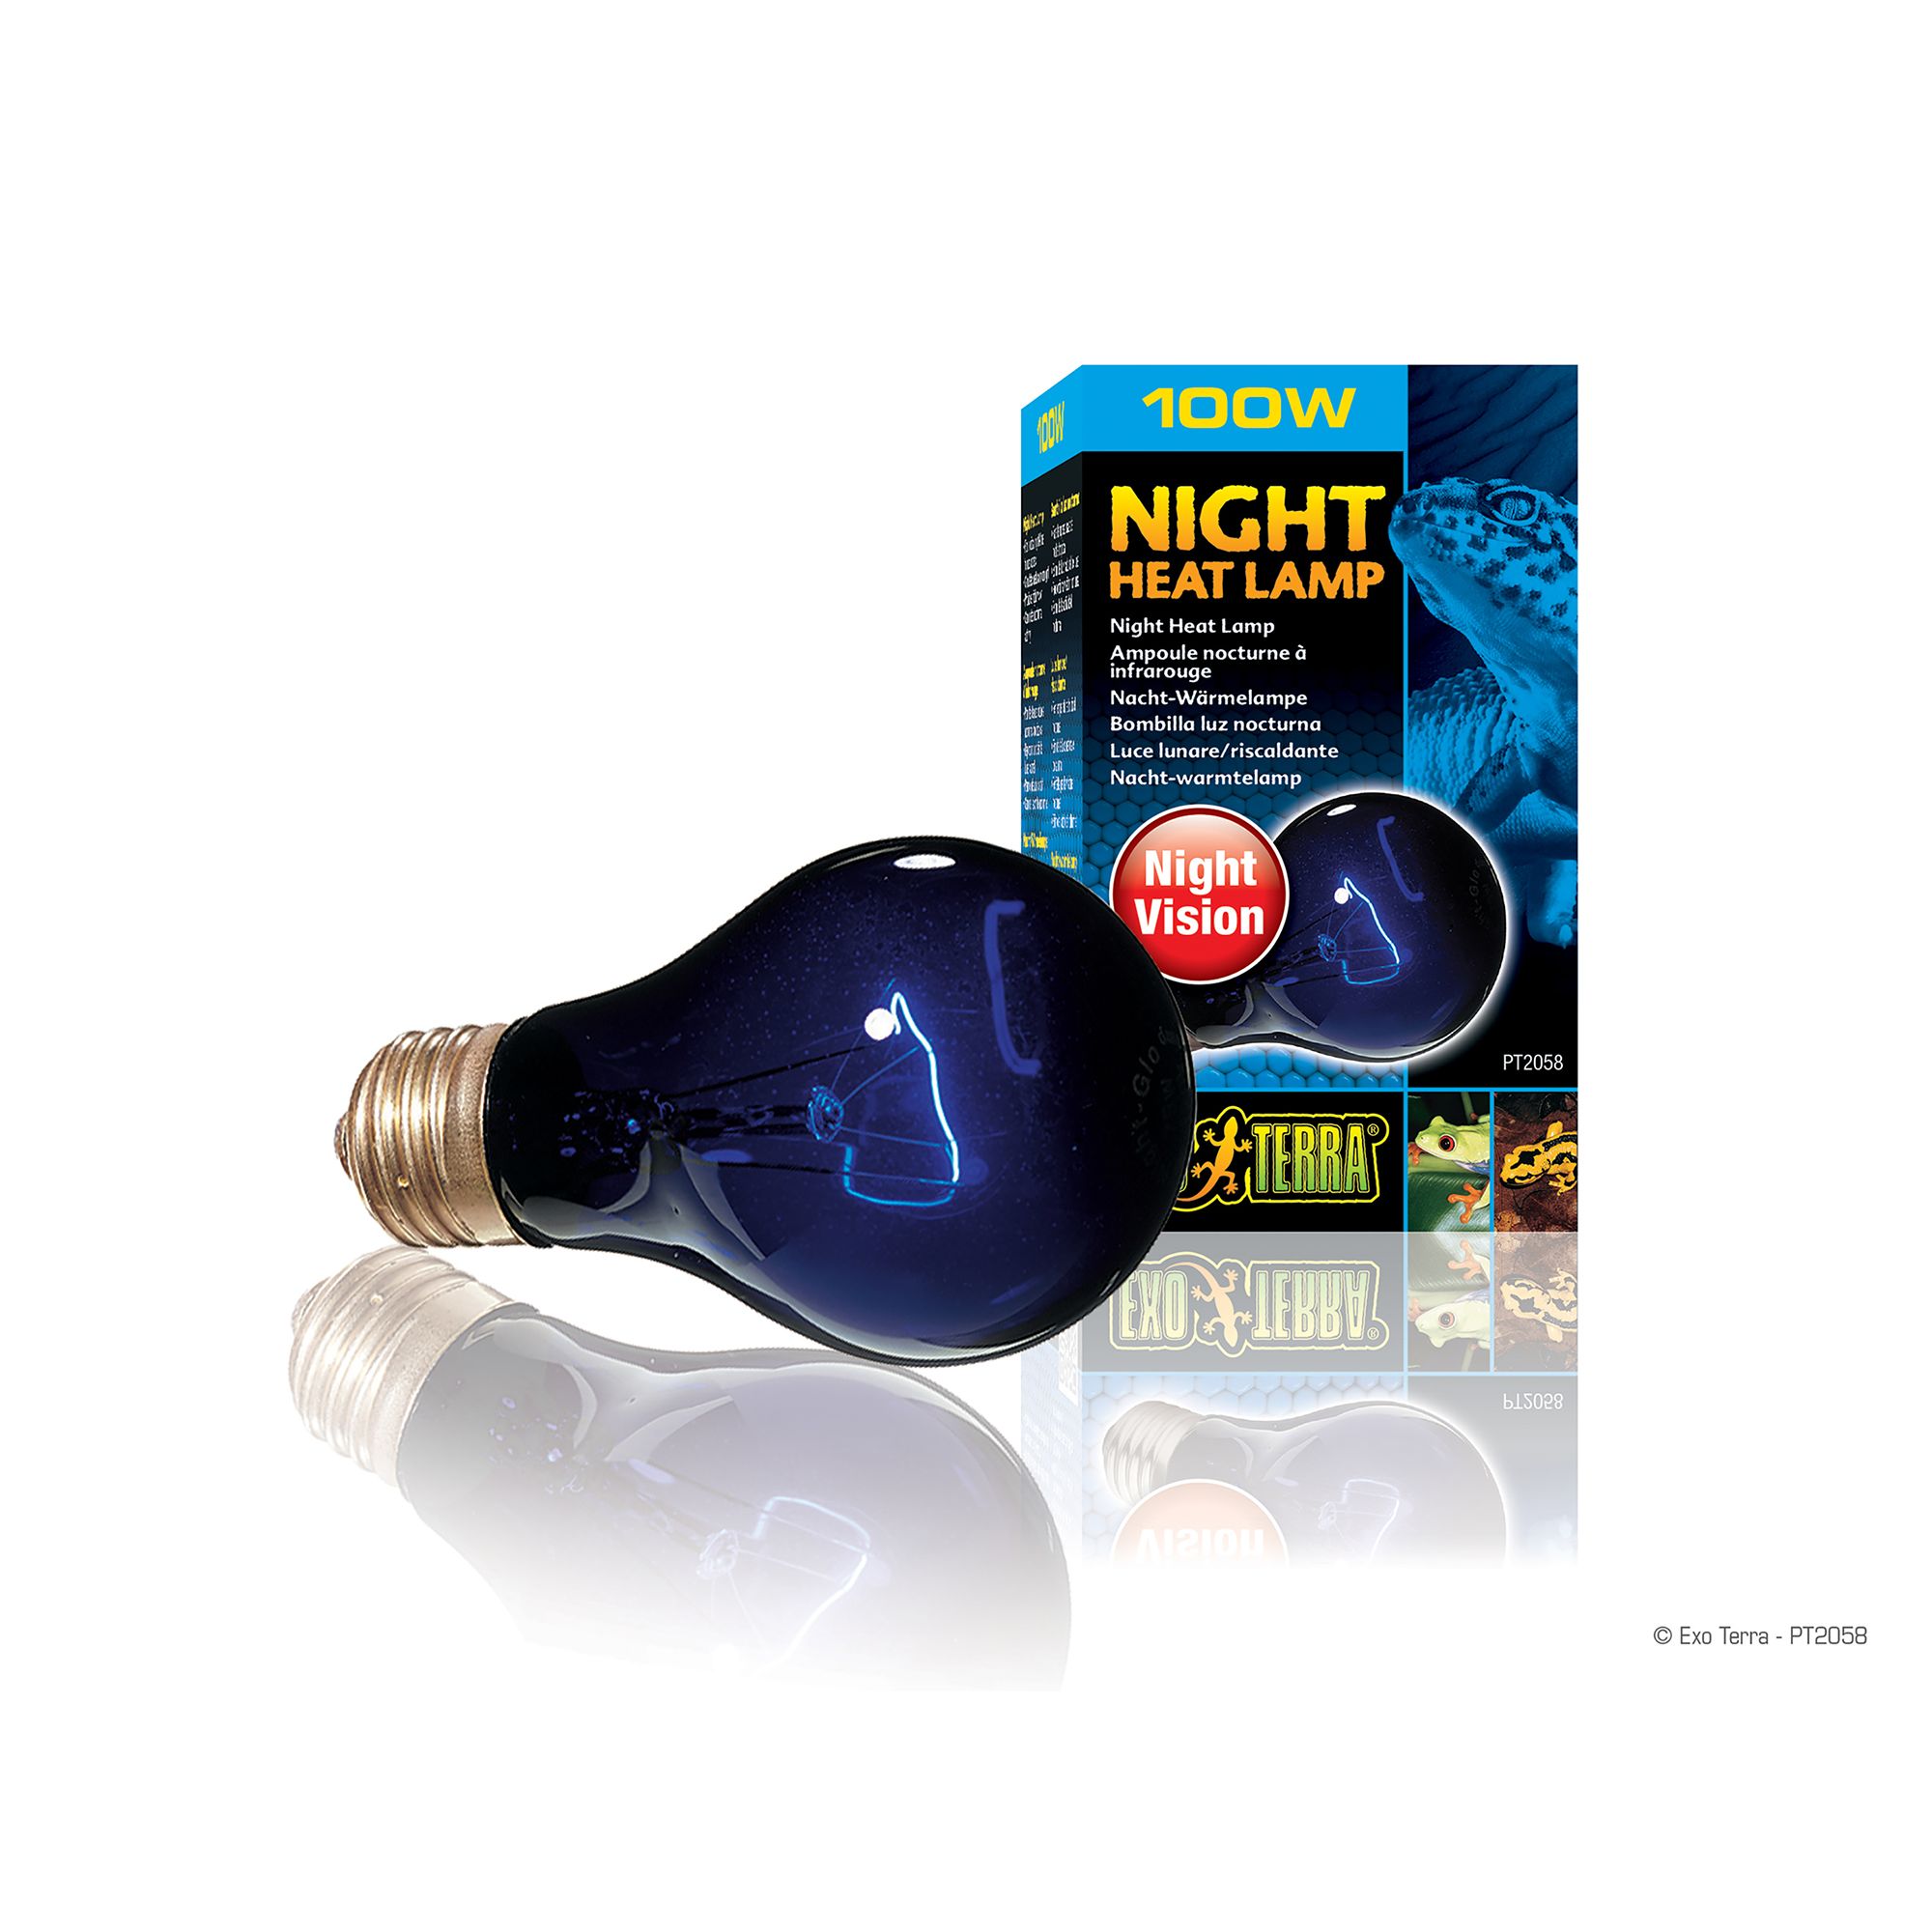 Exo Terra® Night Heat Lamp | reptile 